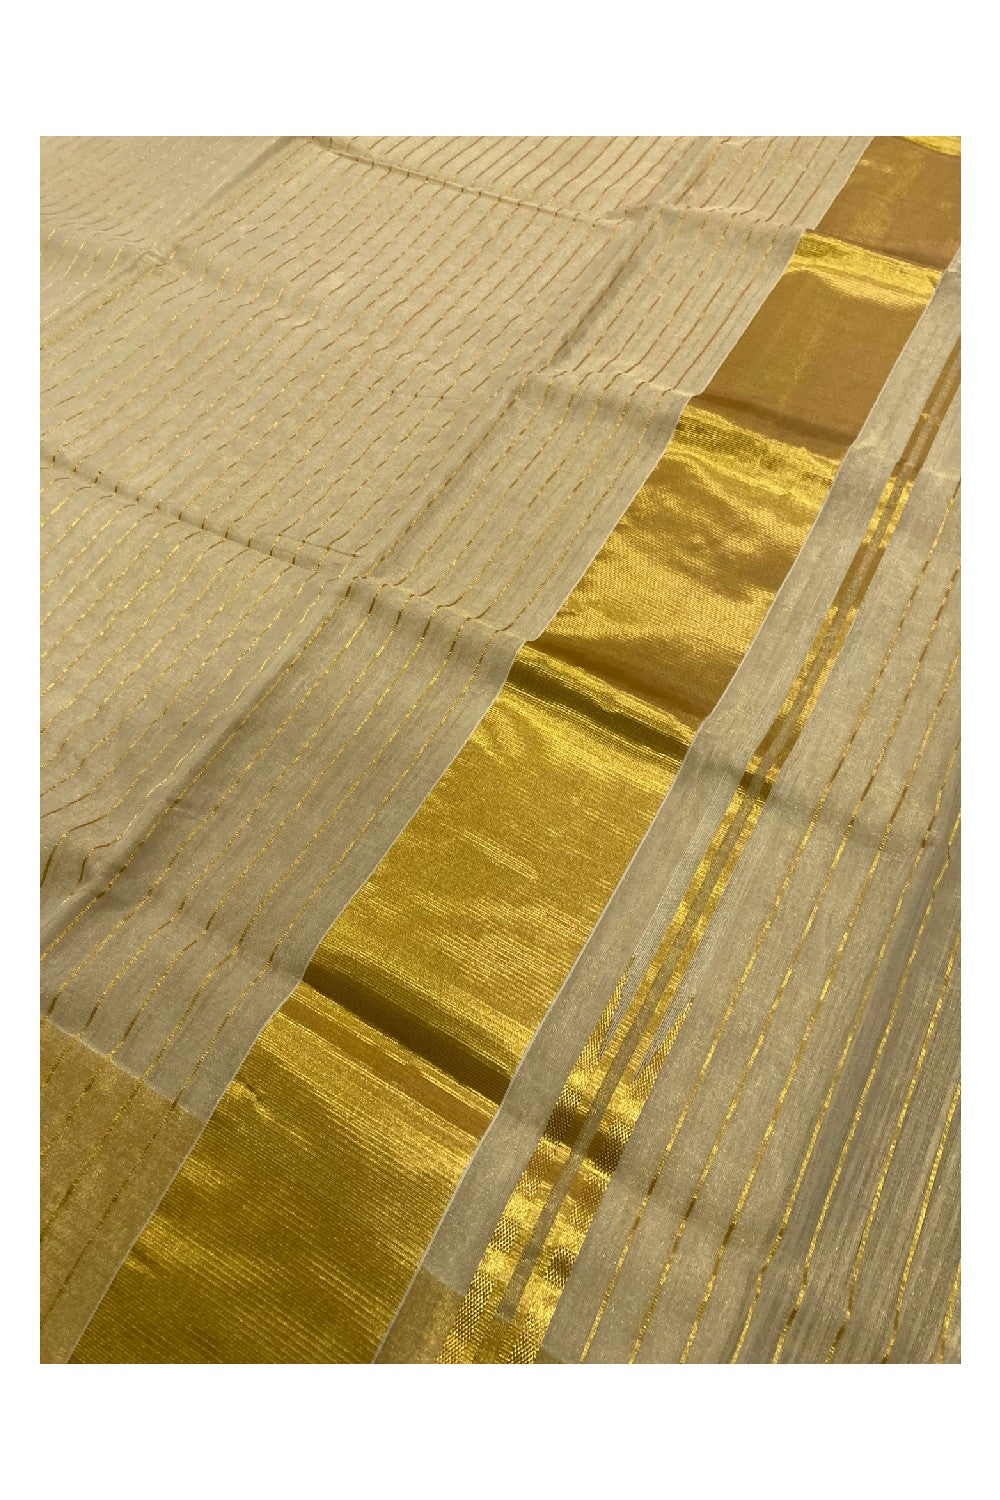 Southloom Balaramapuram Handloom Stripes Work Tissue Saree with 4 inch Pallu